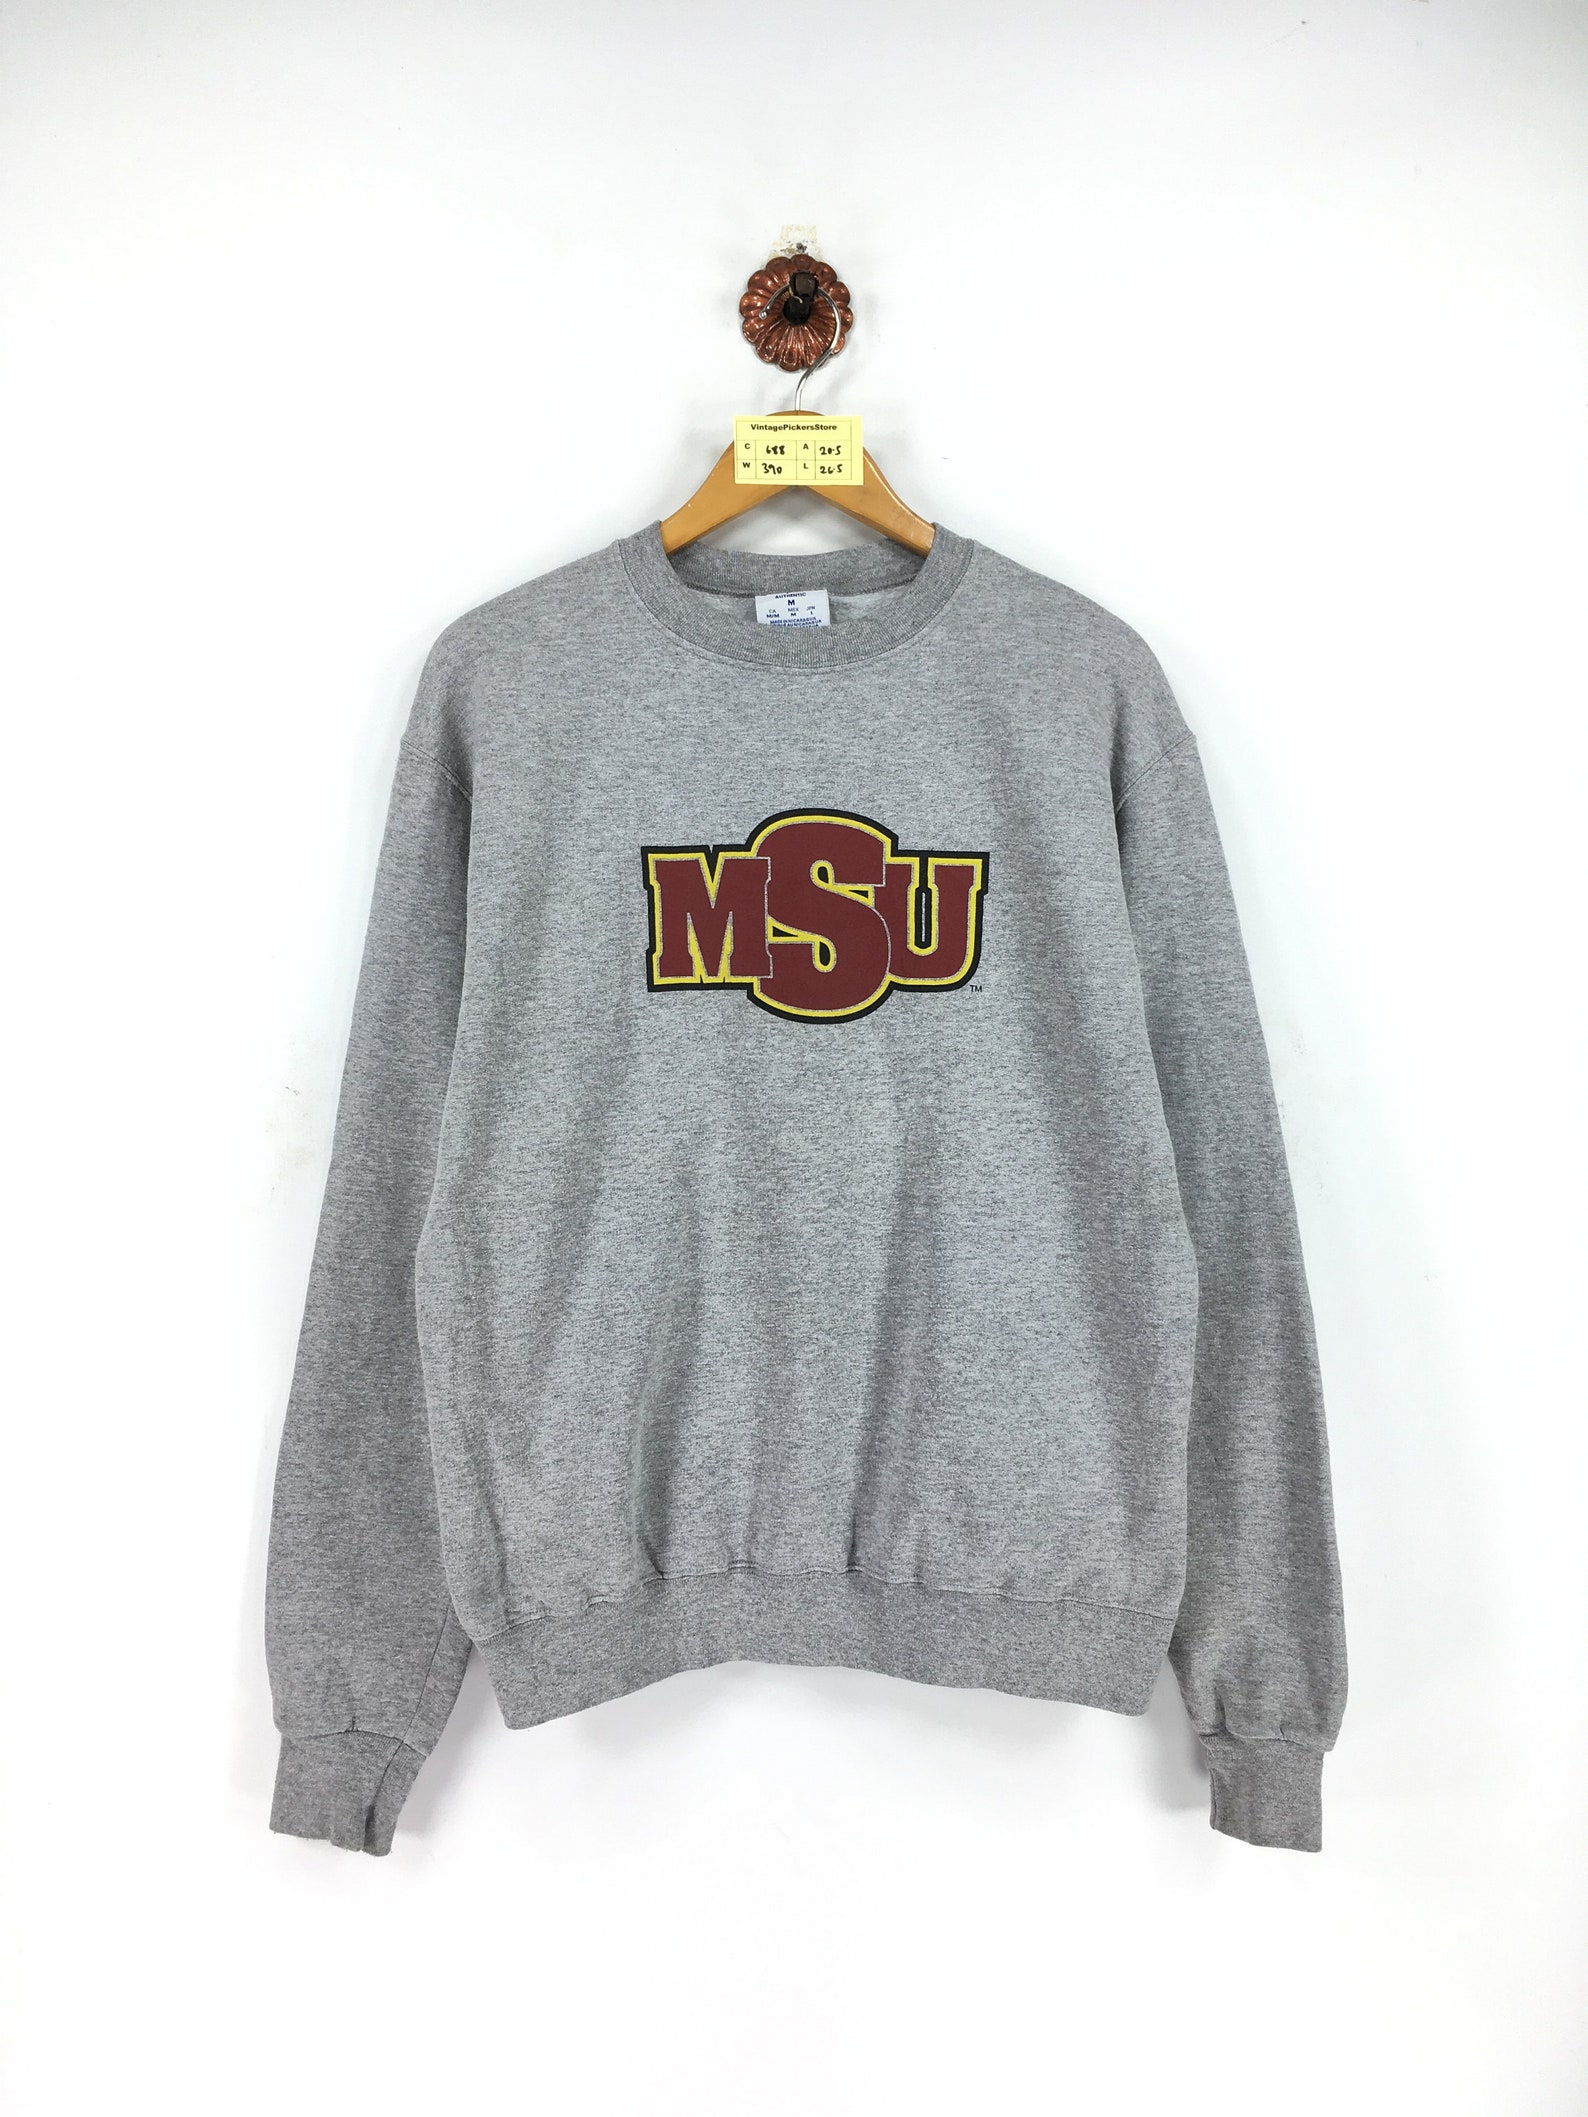 Vintage Champion MSU Pullover Sweatshirt Unisex Medium | Etsy